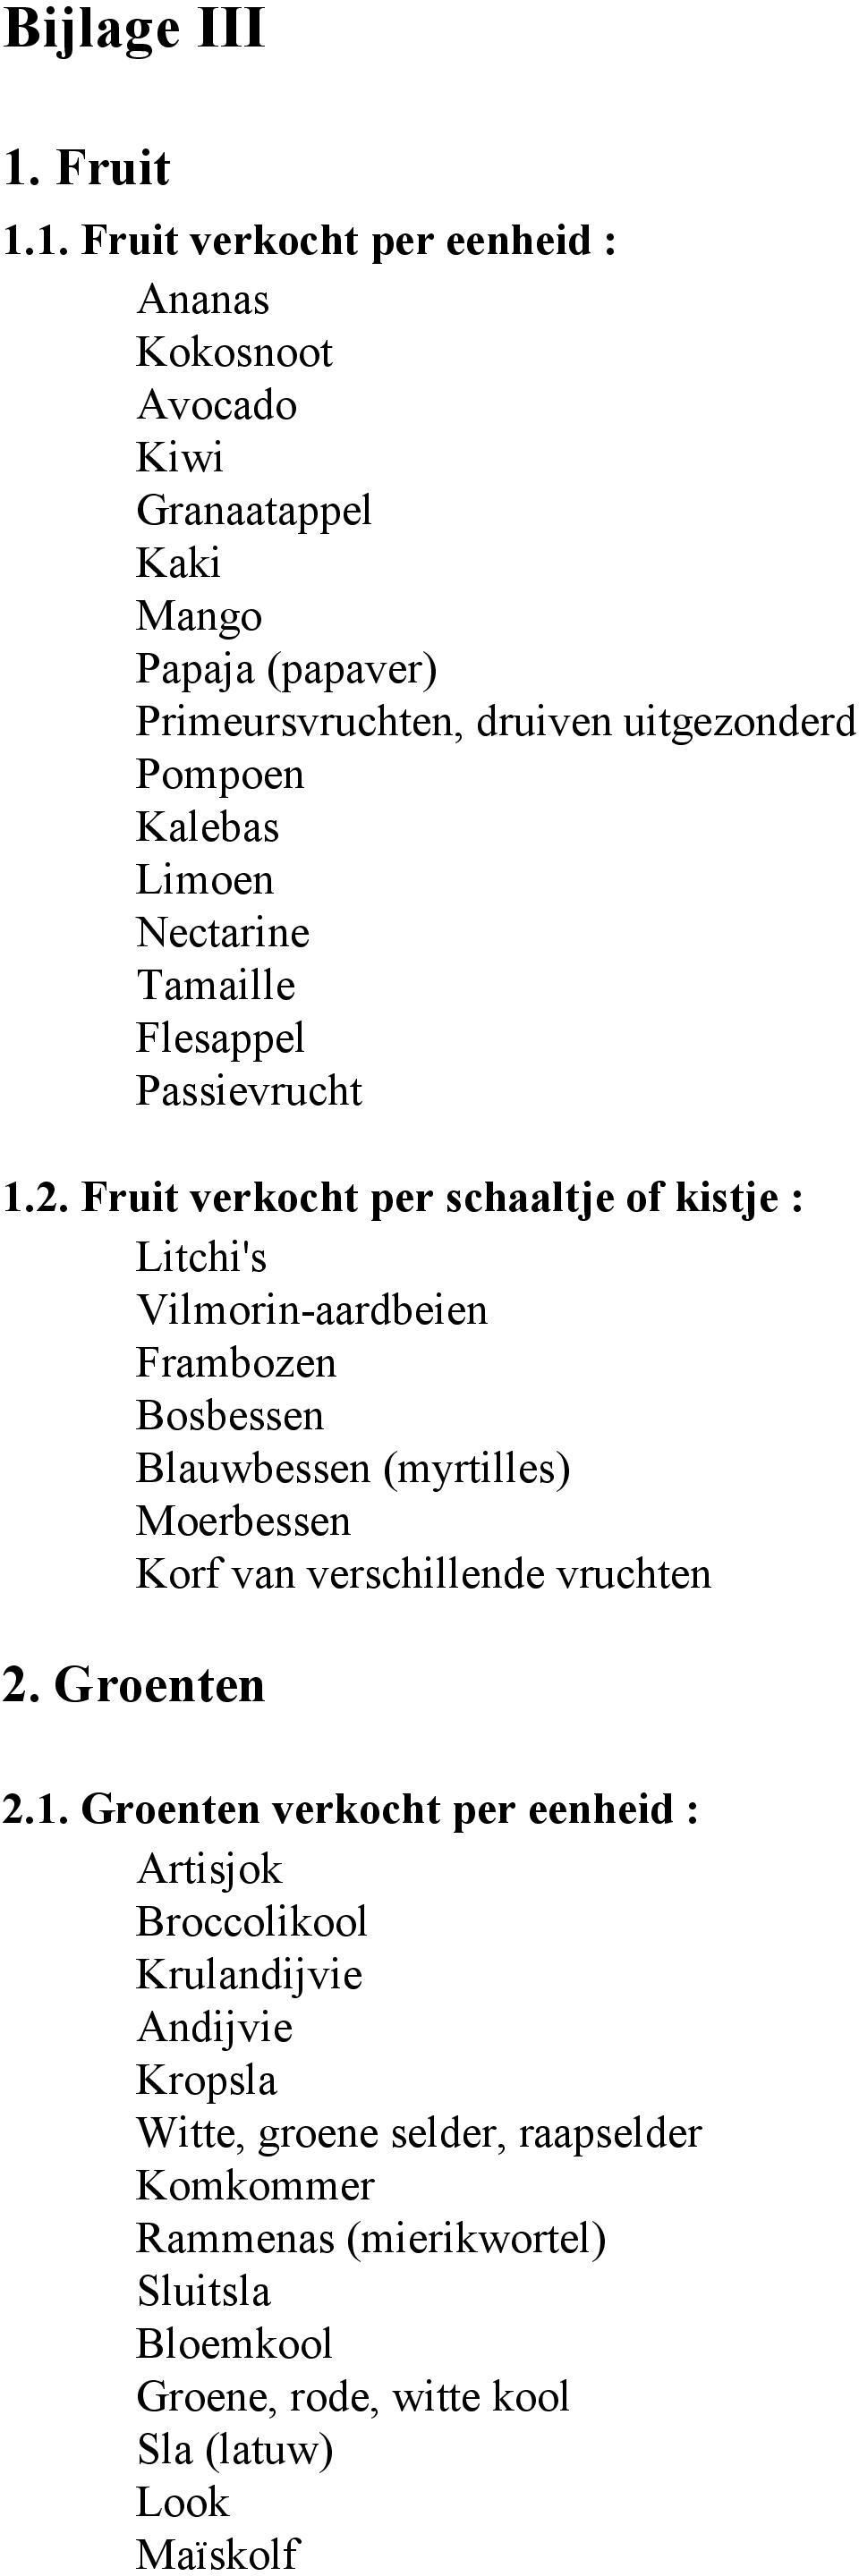 1. Fruit verkocht per eenheid : Ananas Kokosnoot Avocado Kiwi Granaatappel Kaki Mango Papaja (papaver) Primeursvruchten, druiven uitgezonderd Pompoen